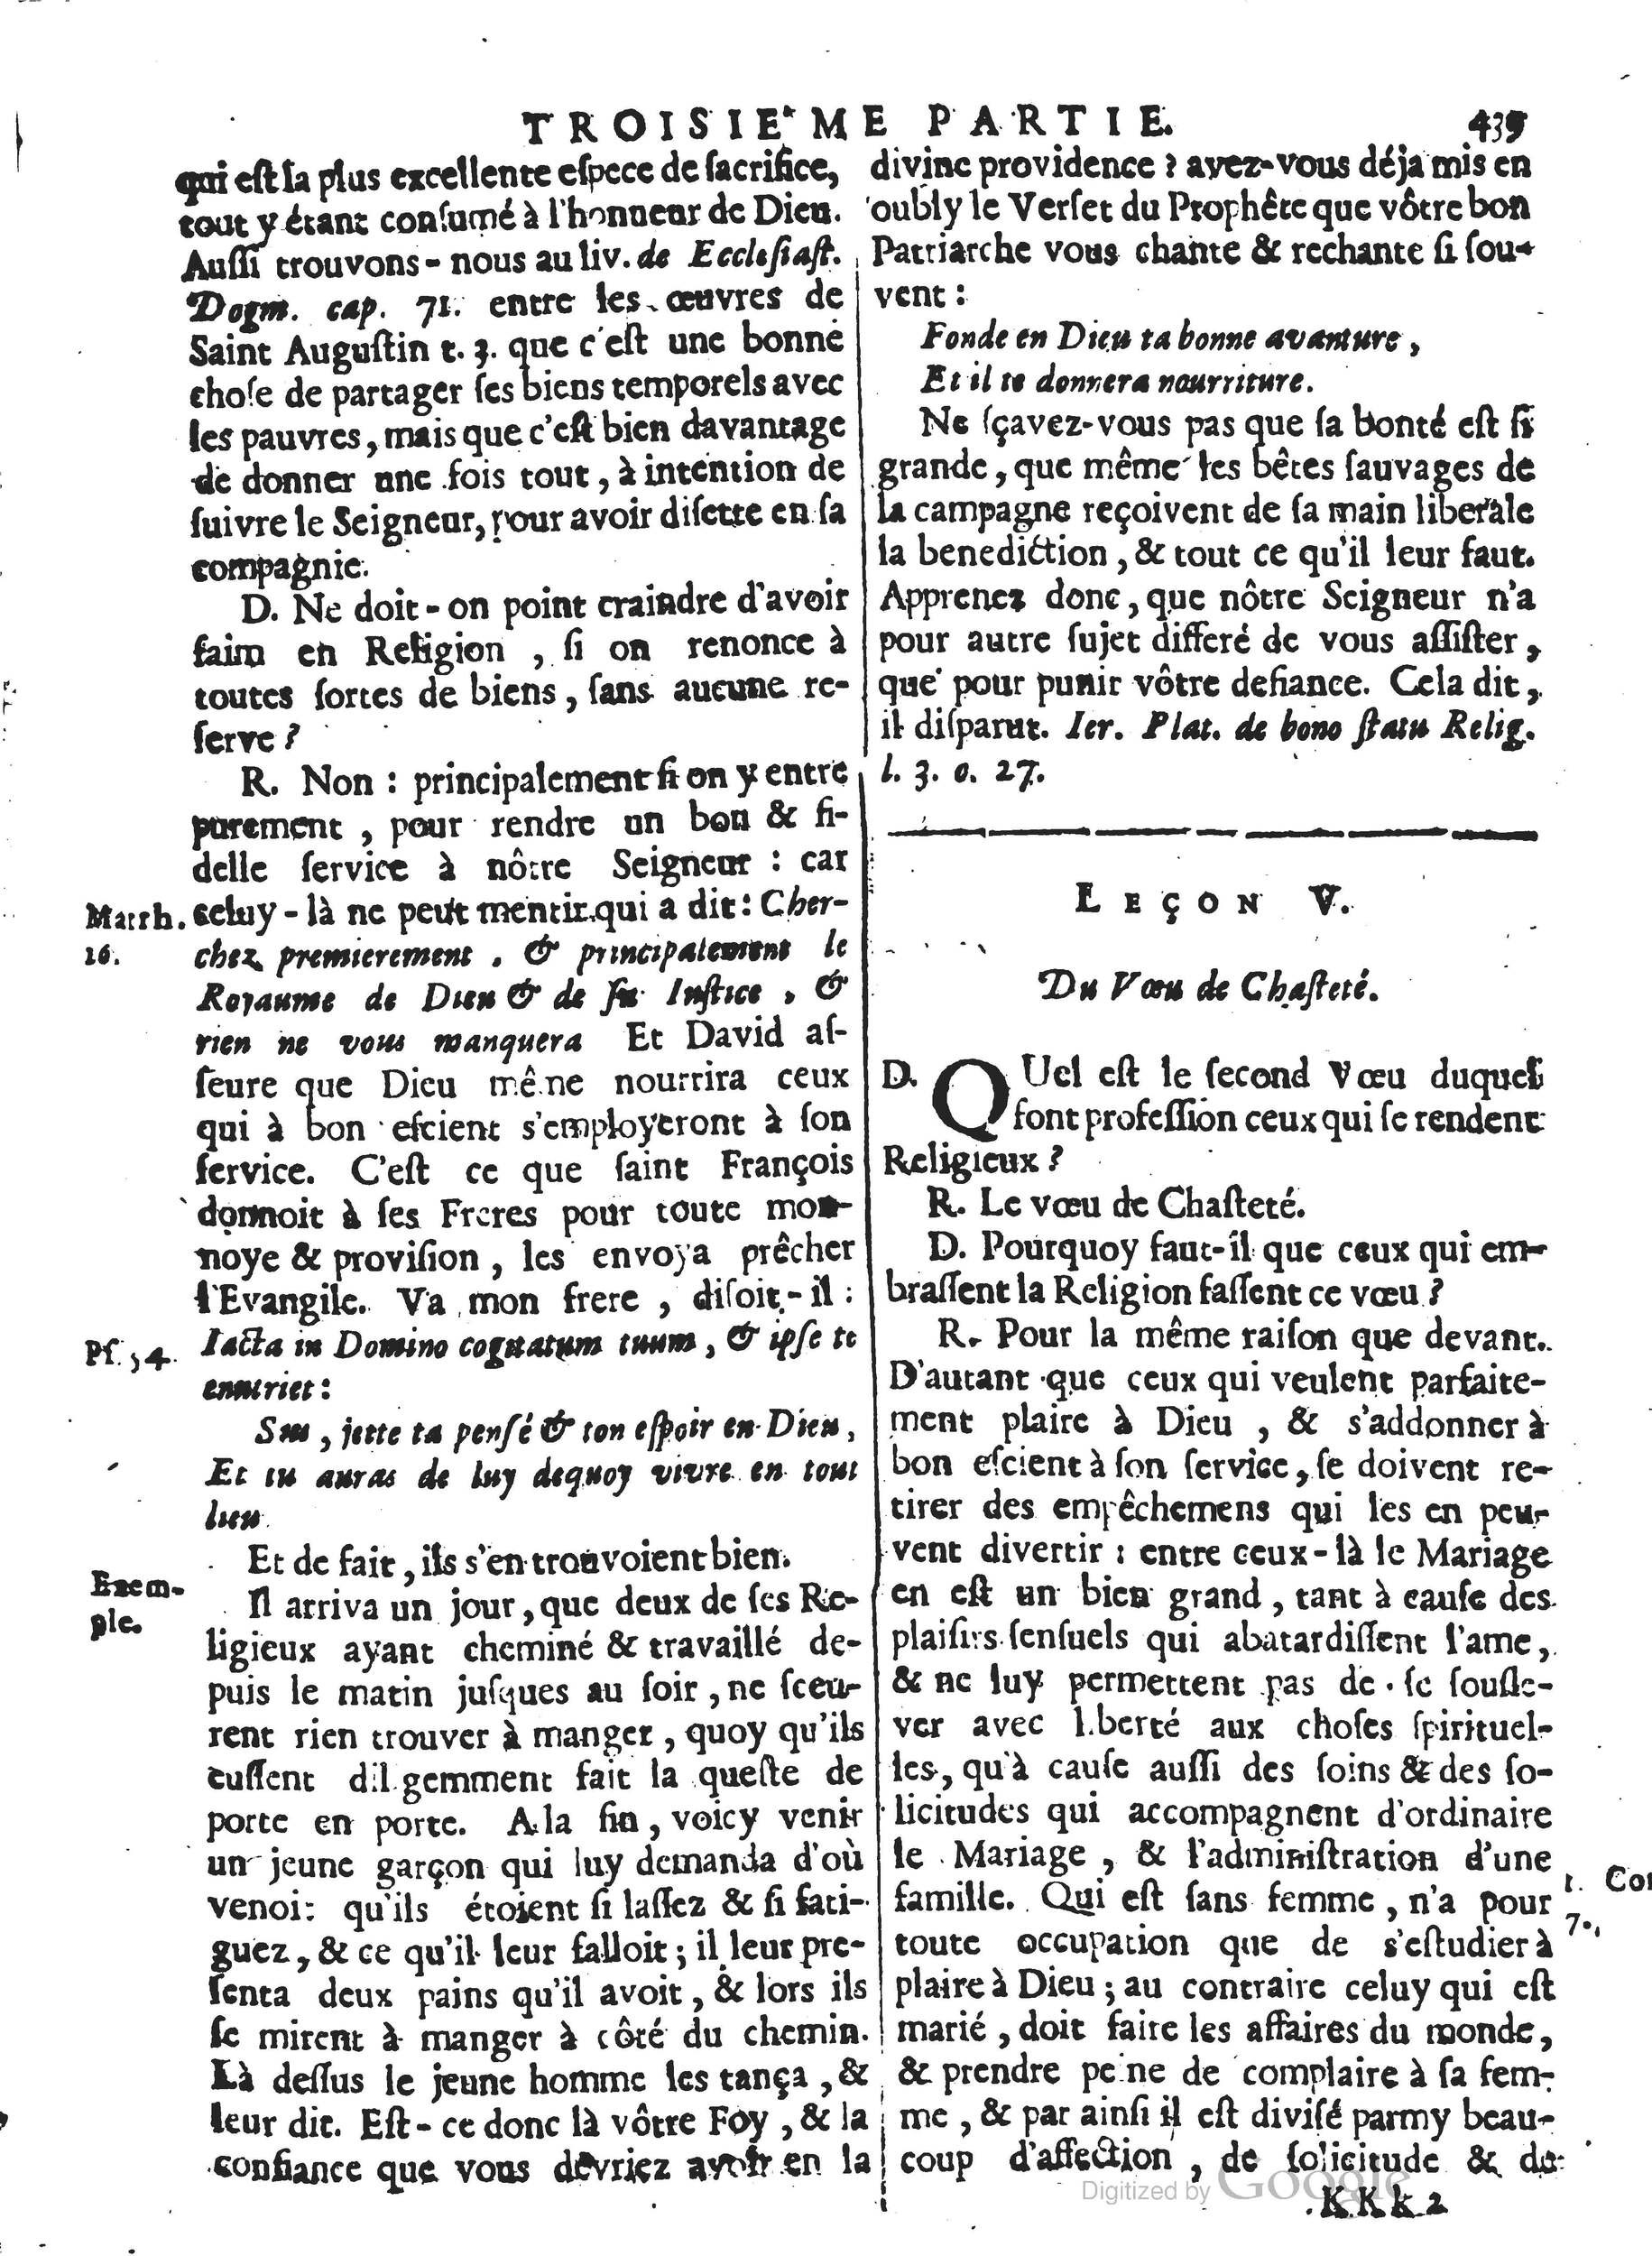 1595 Jean Besongne Vrai Trésor de la doctrine chrétienne BM Lyon_Page_447.jpg